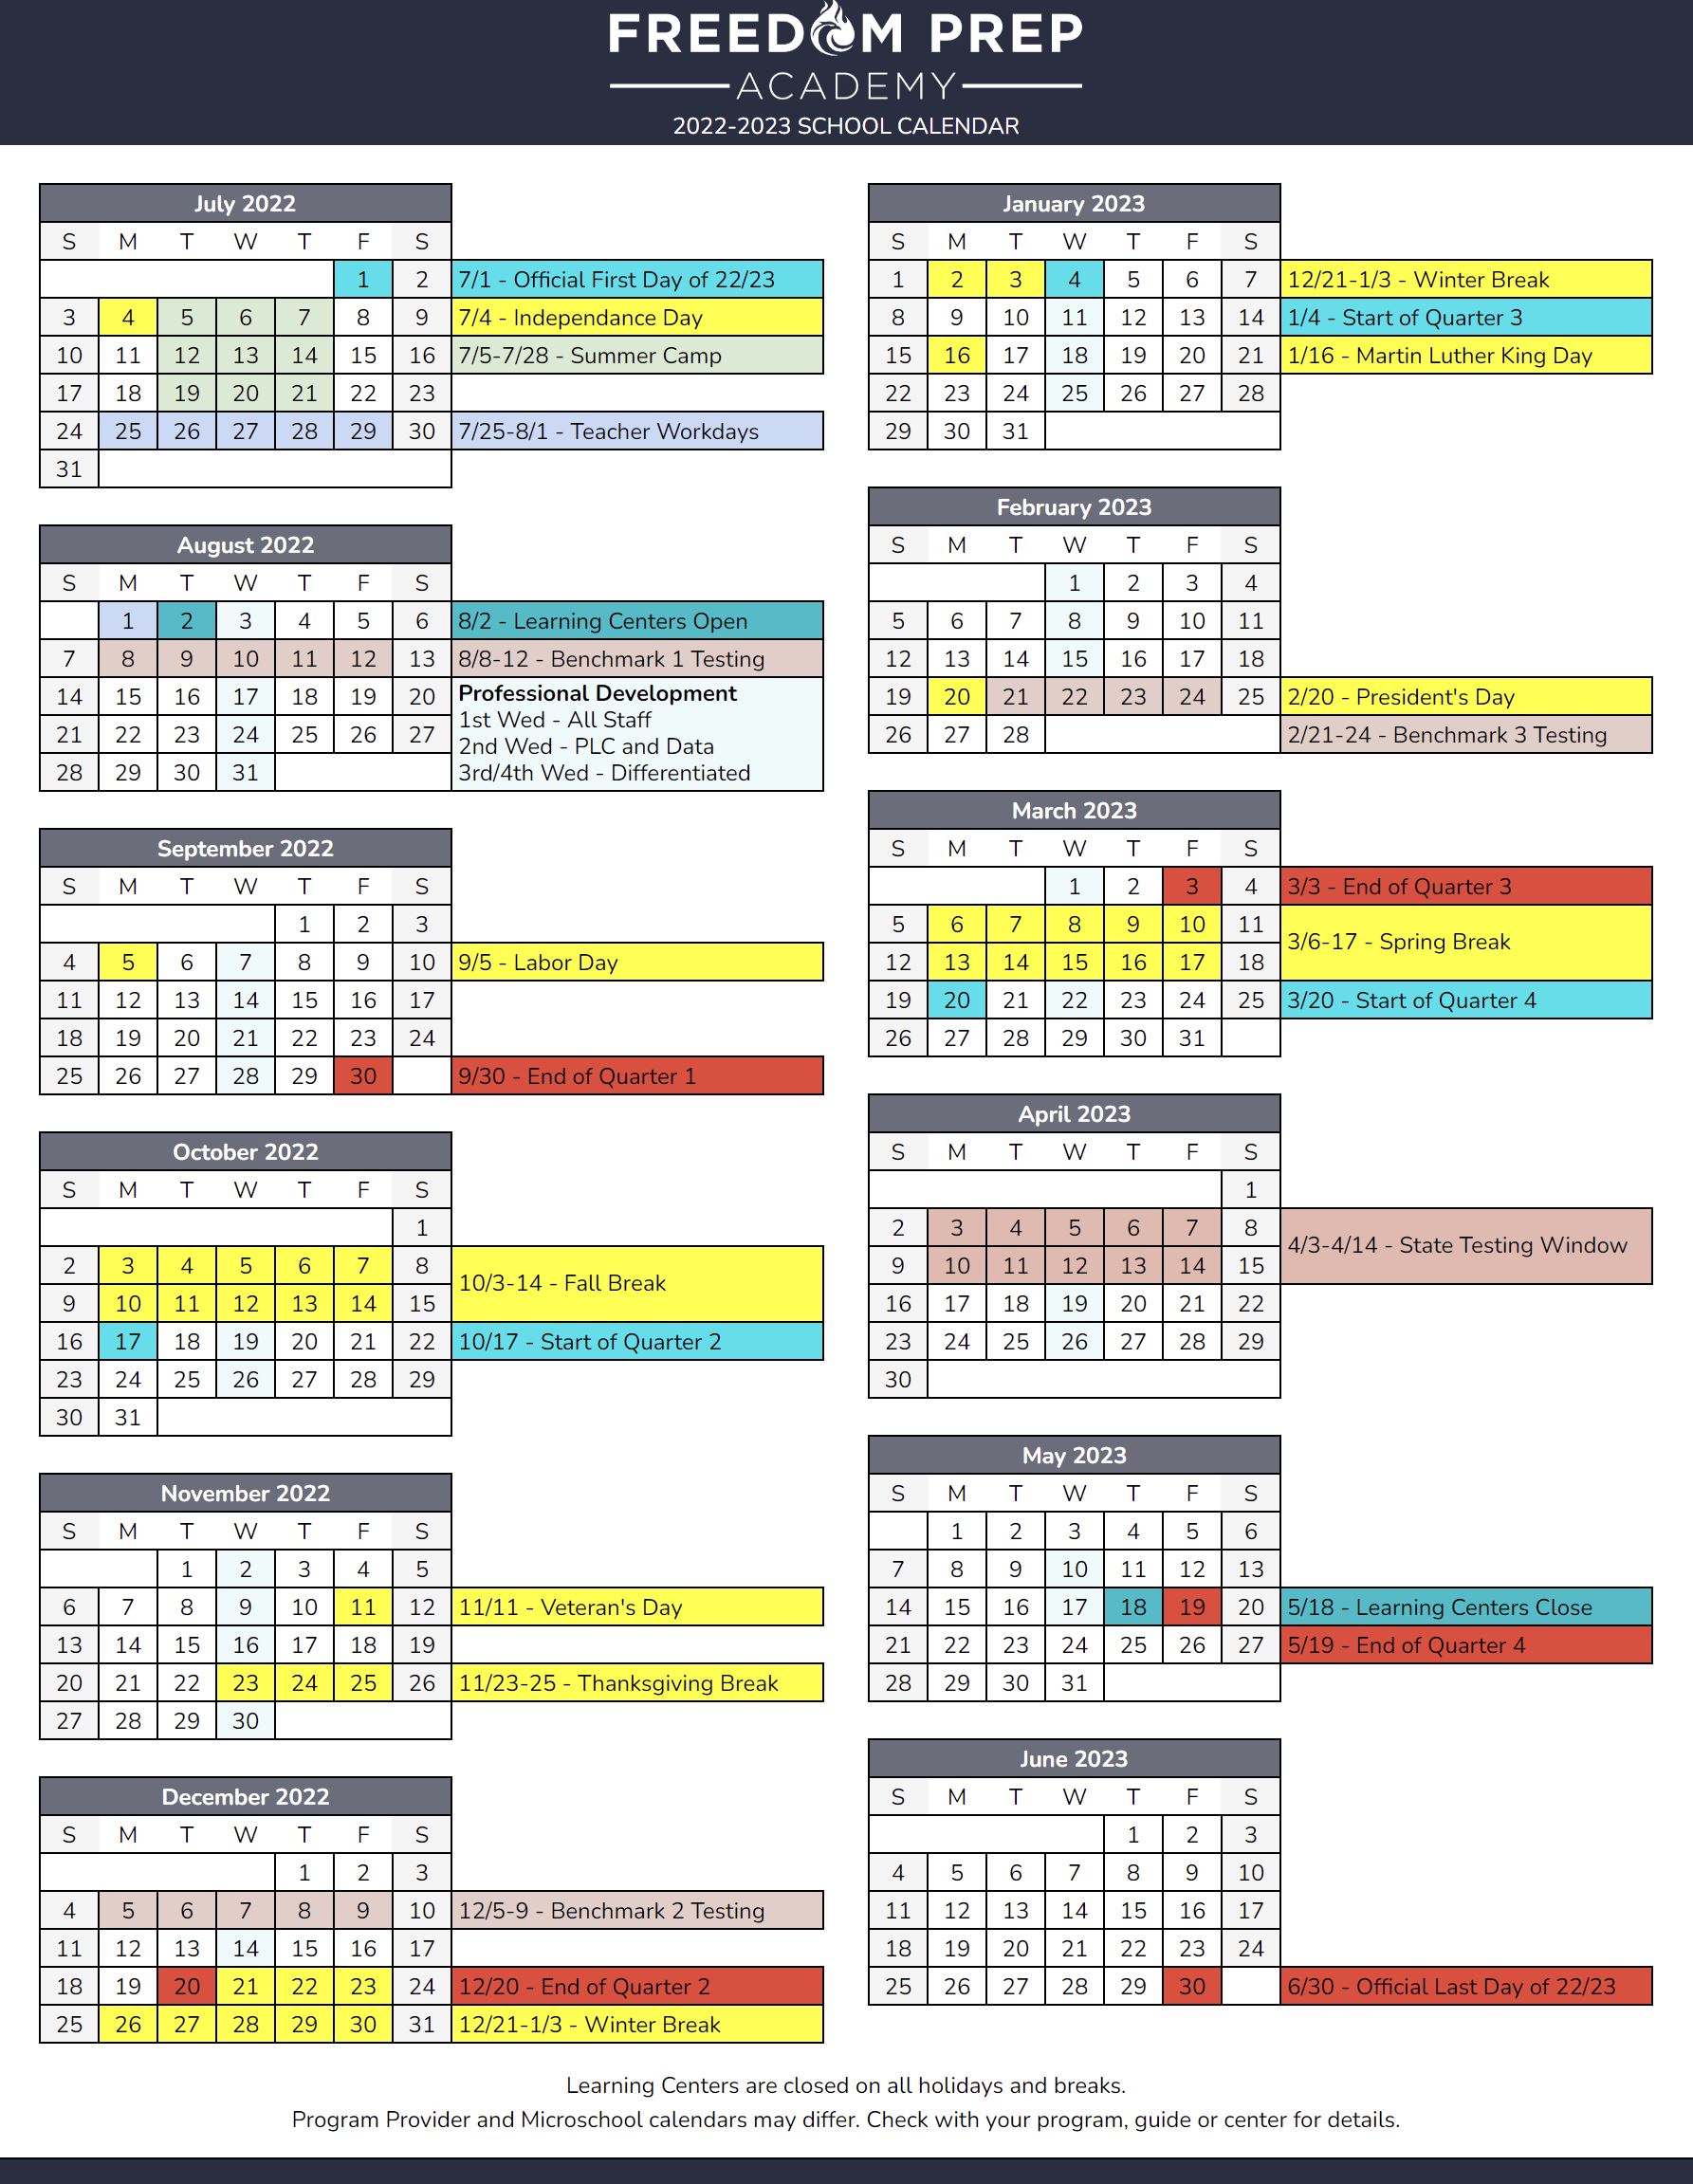 calendar-freedom-prep-academy